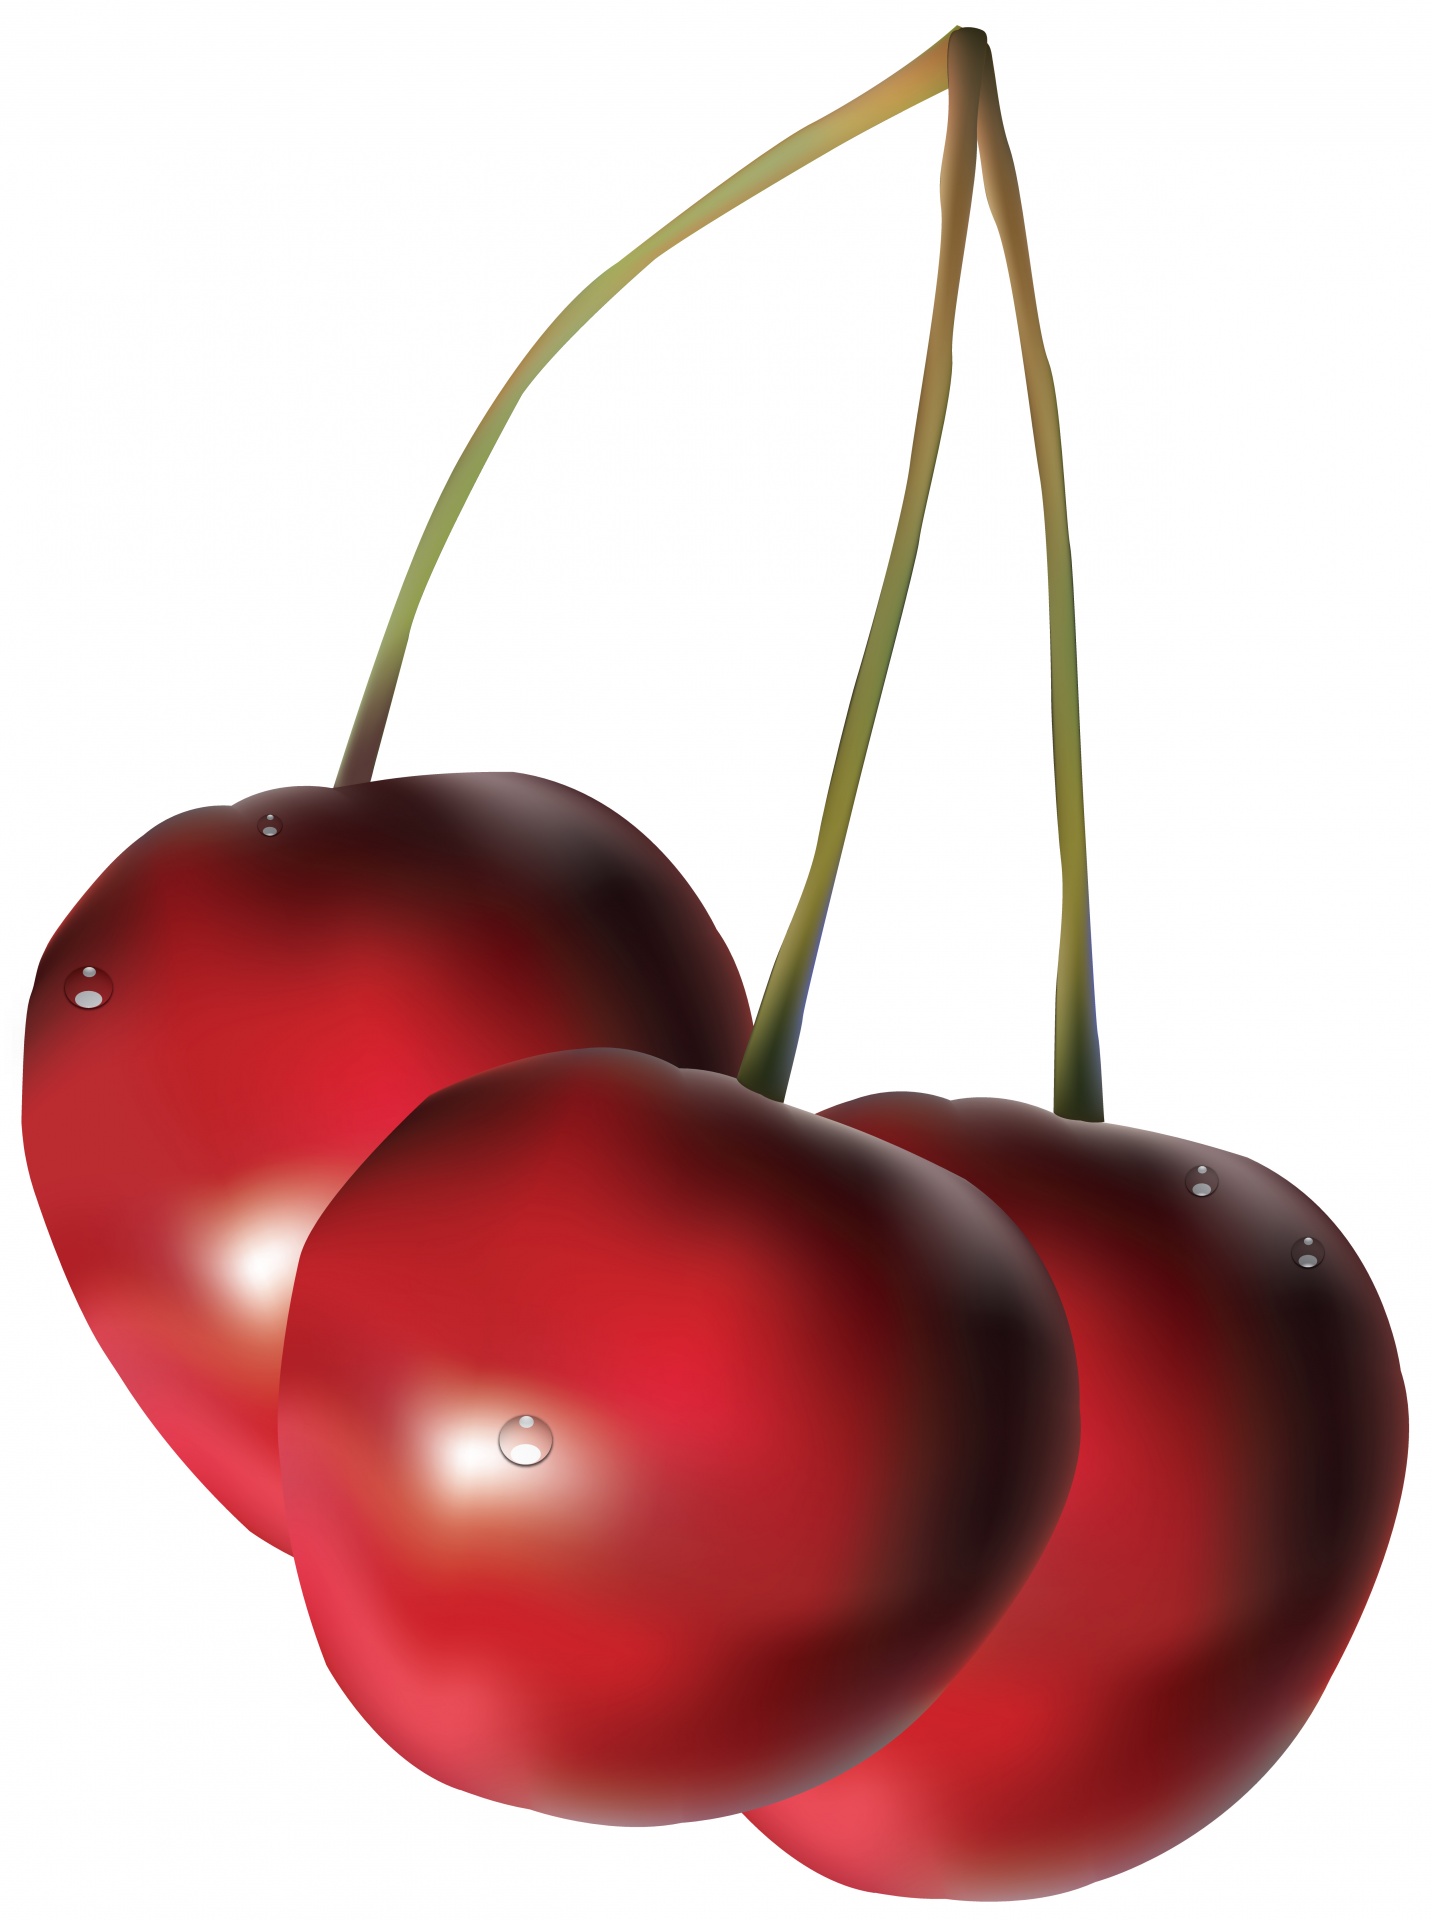 cherry-illustration-free-stock-photo-public-domain-pictures